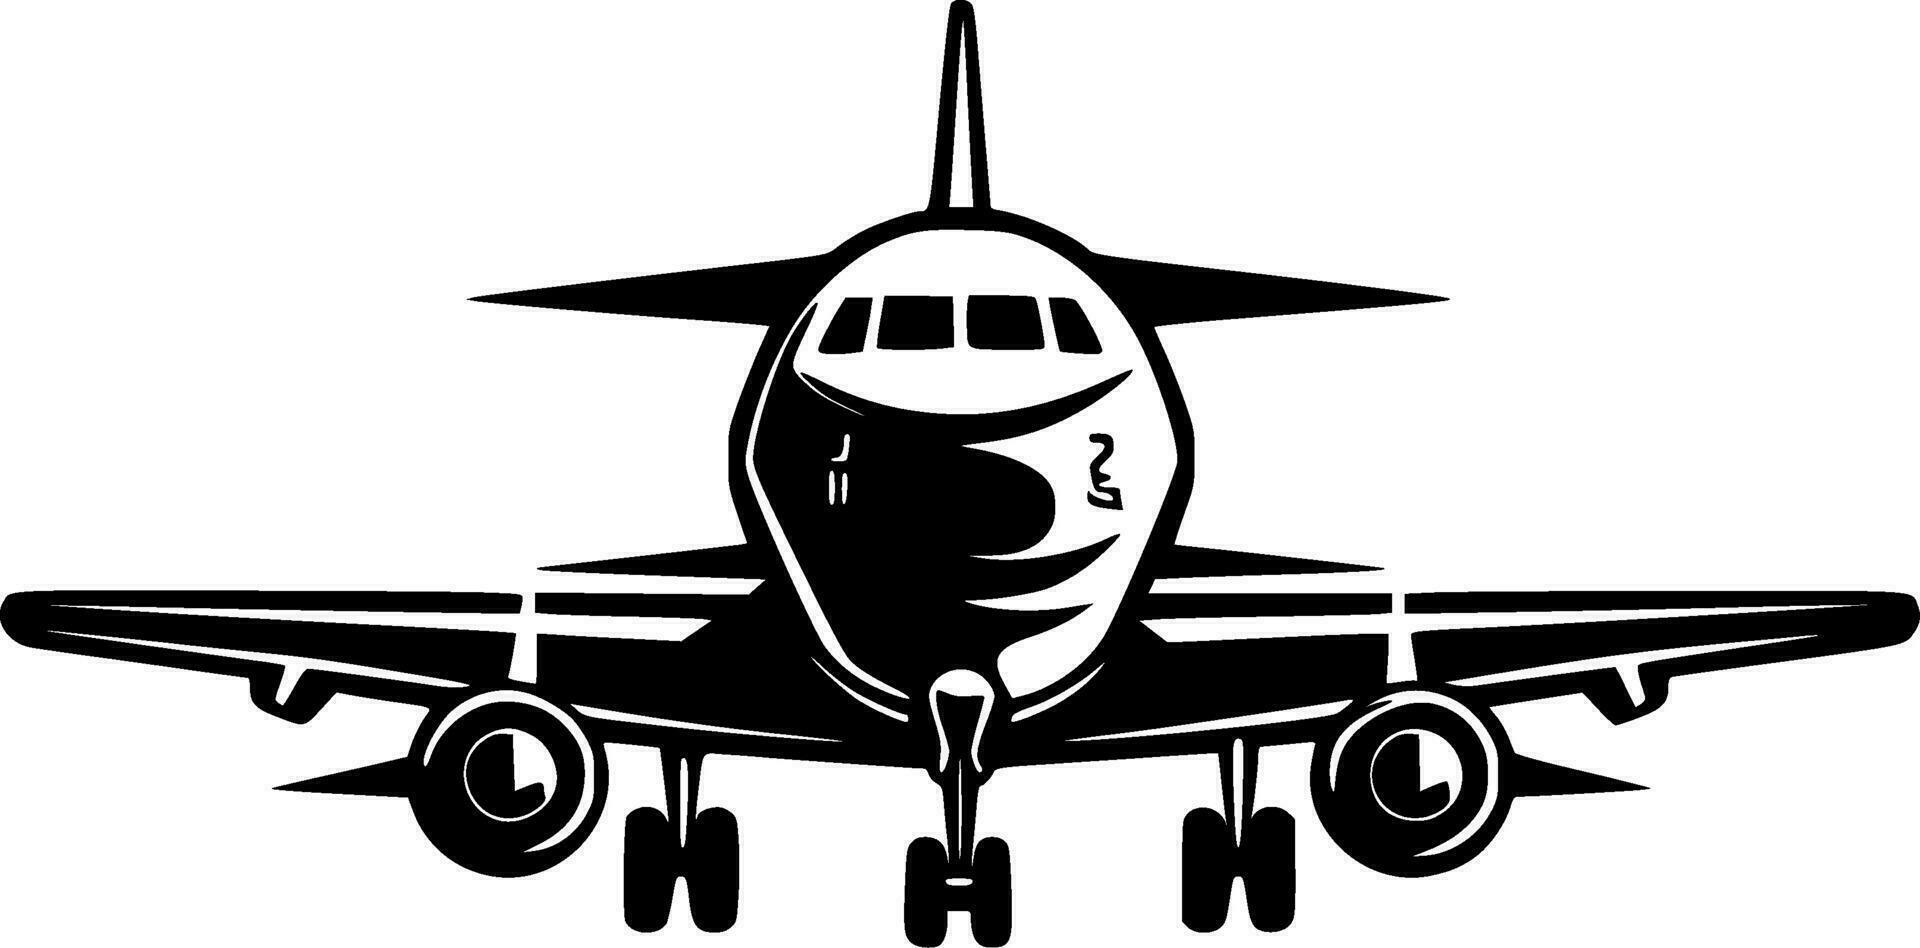 Plane, Black and White Vector illustration